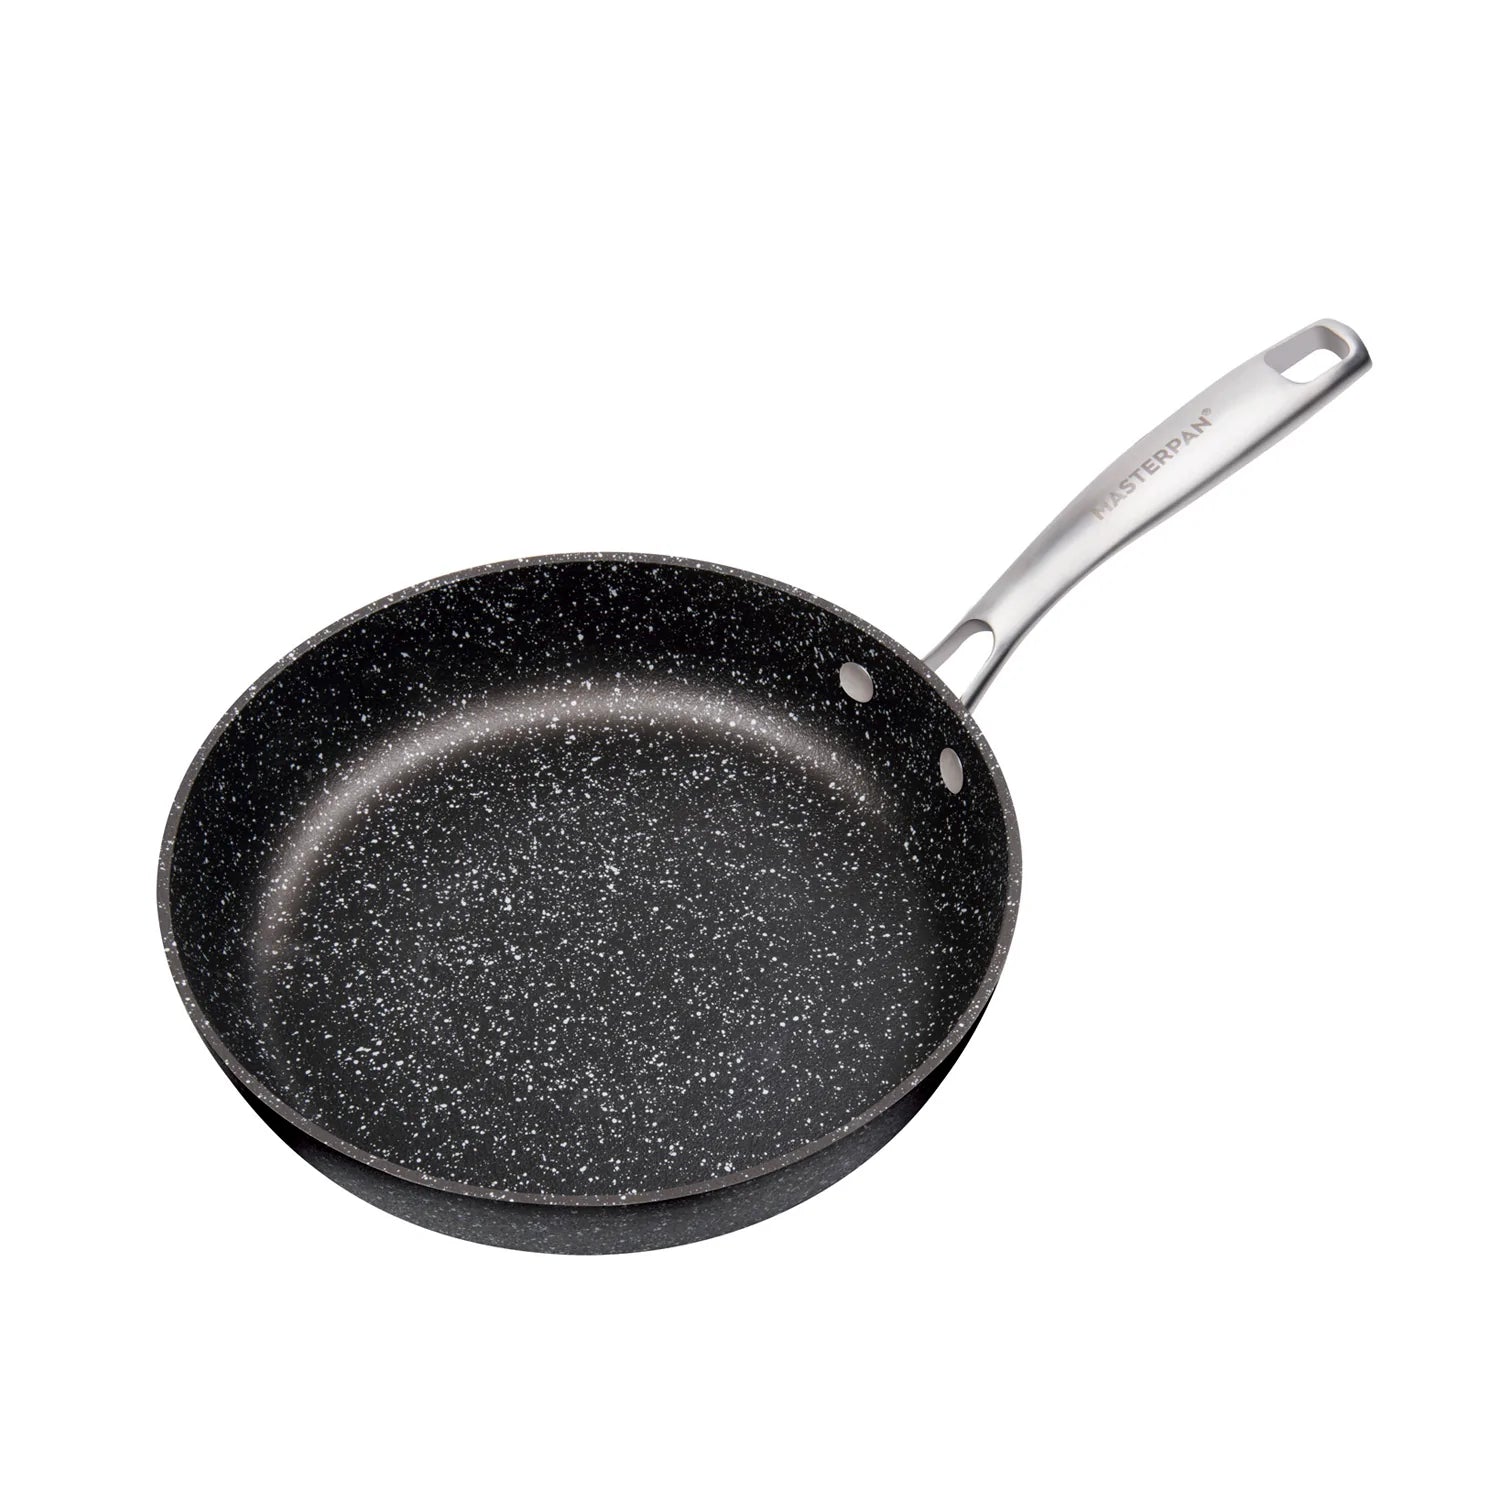 MasterPan 9.5 in. Healthy Ceramic Non-Stick Aluminium Cookware Fry Pan & Skillet with Bakelite Handle